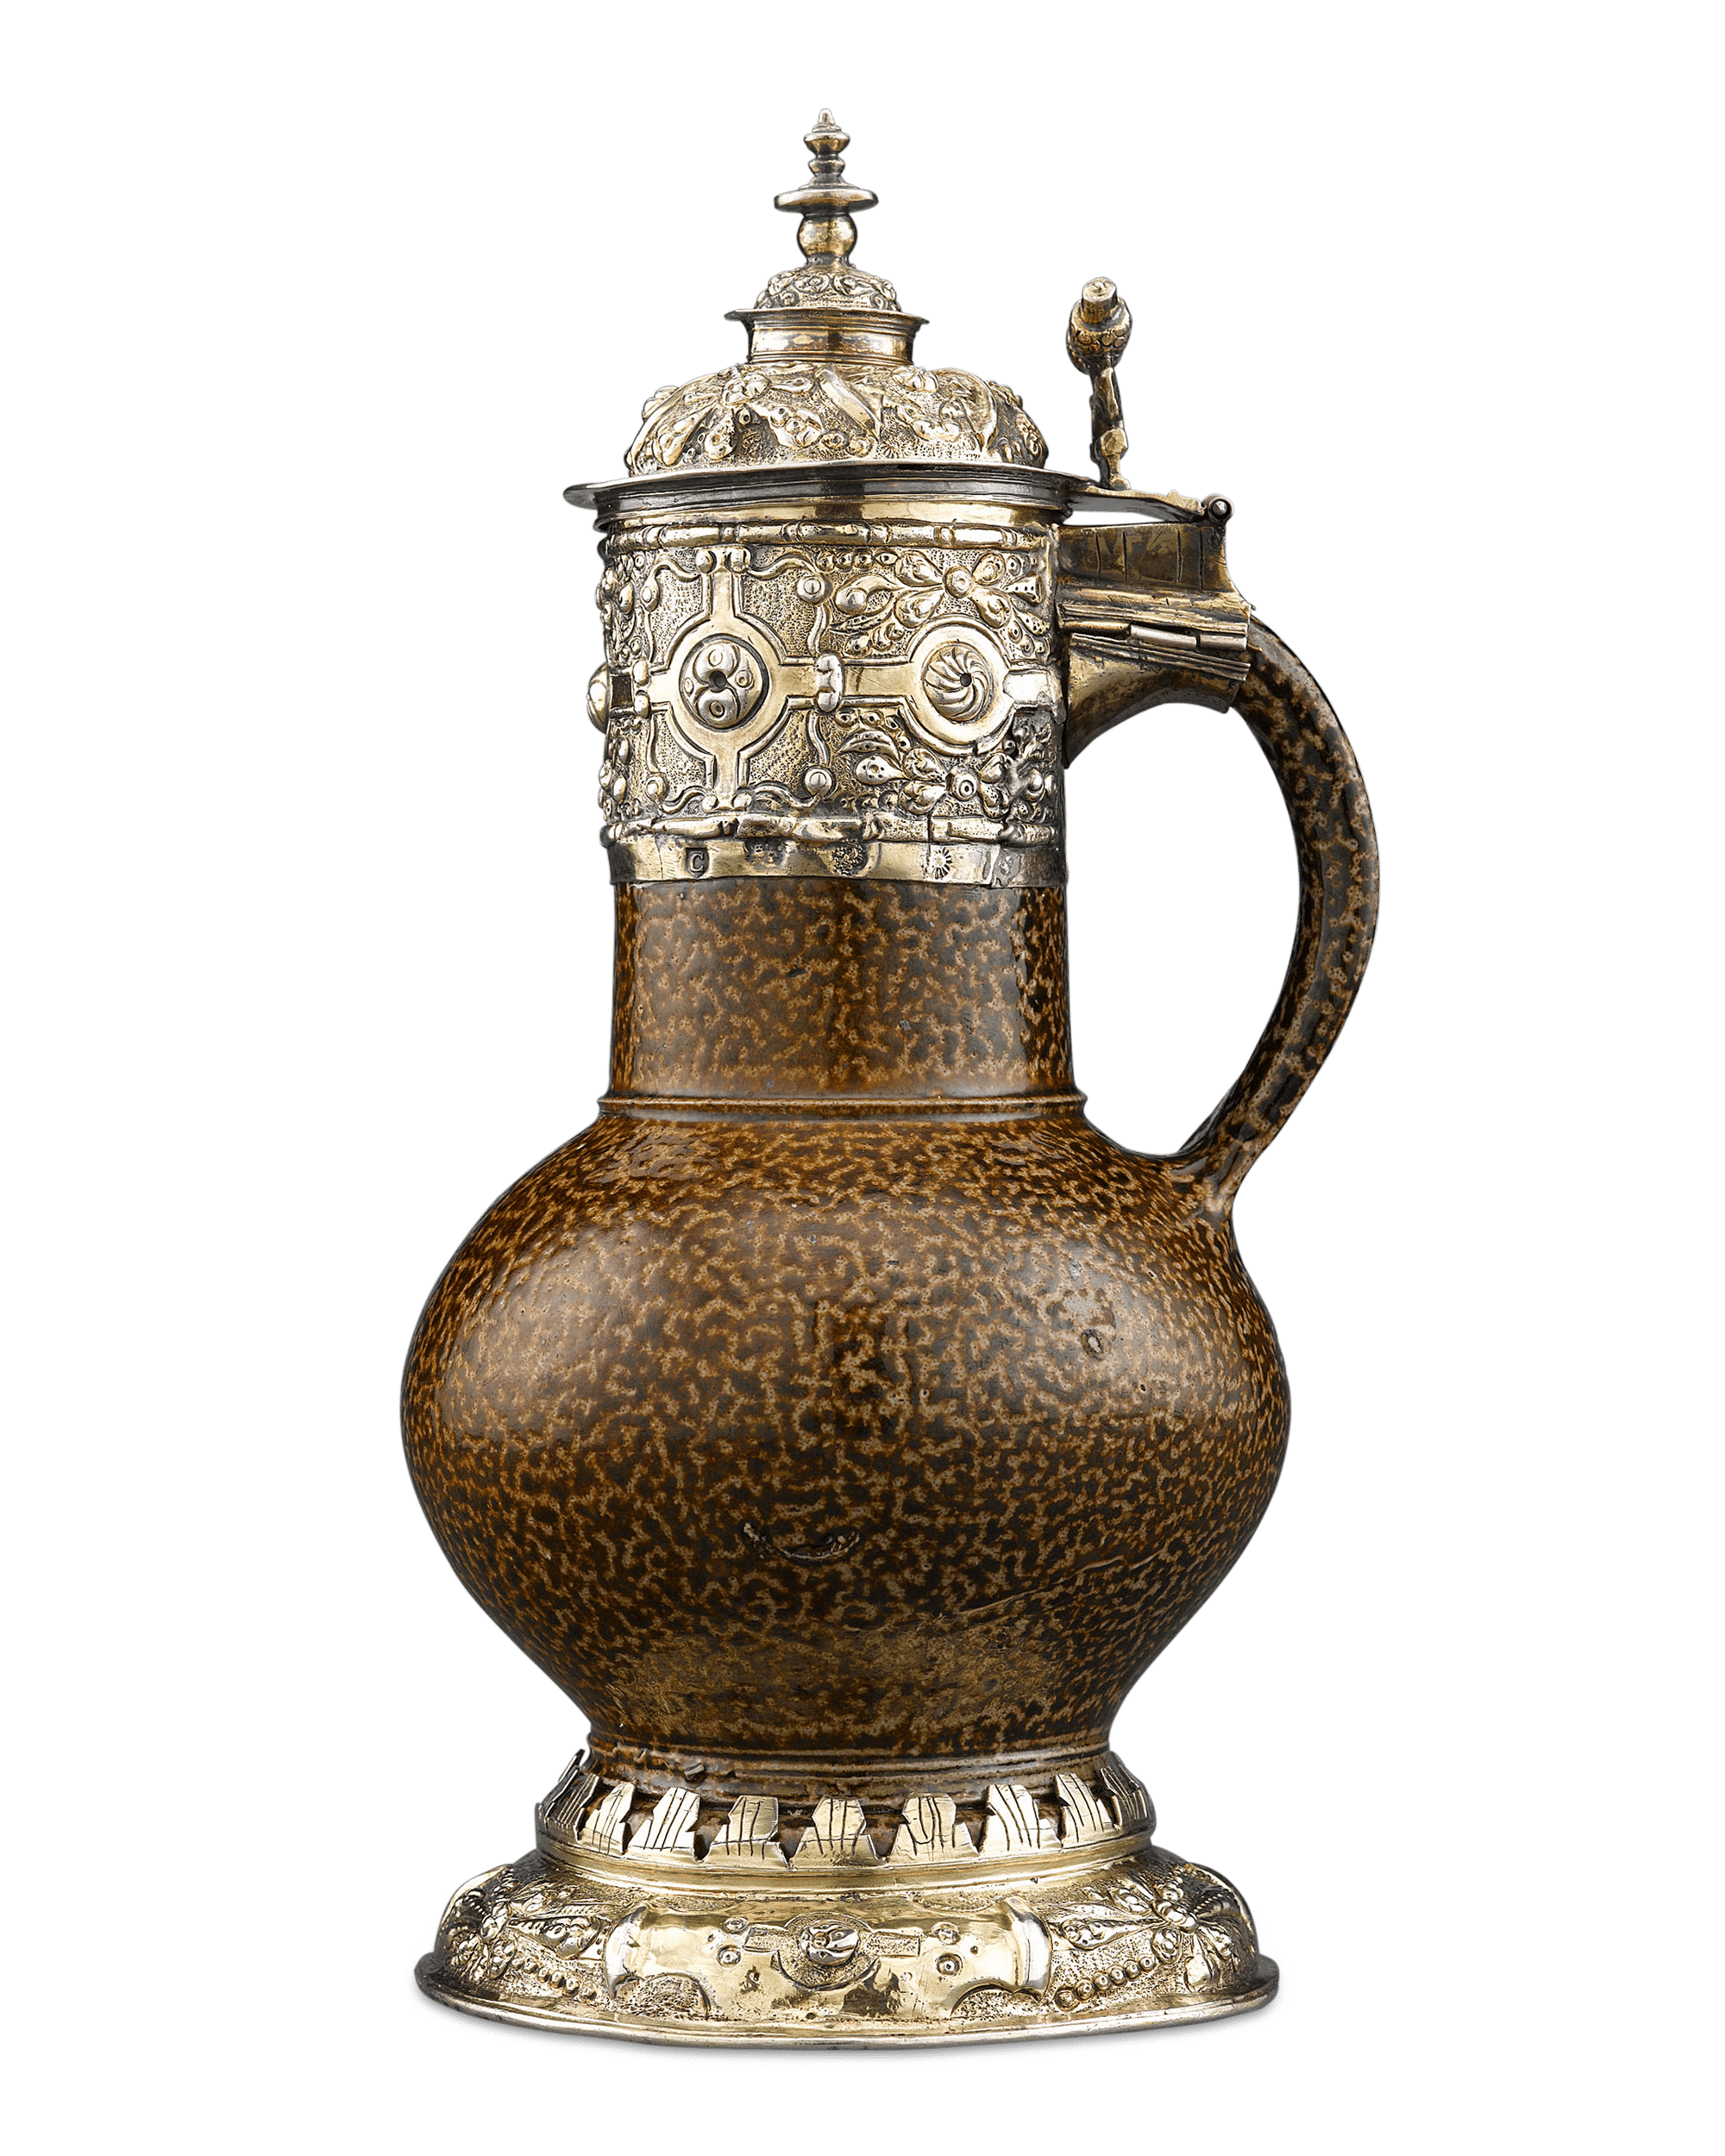 This Elizabethan-period tigerware jug is a rare example of 16th-century craftsmanship